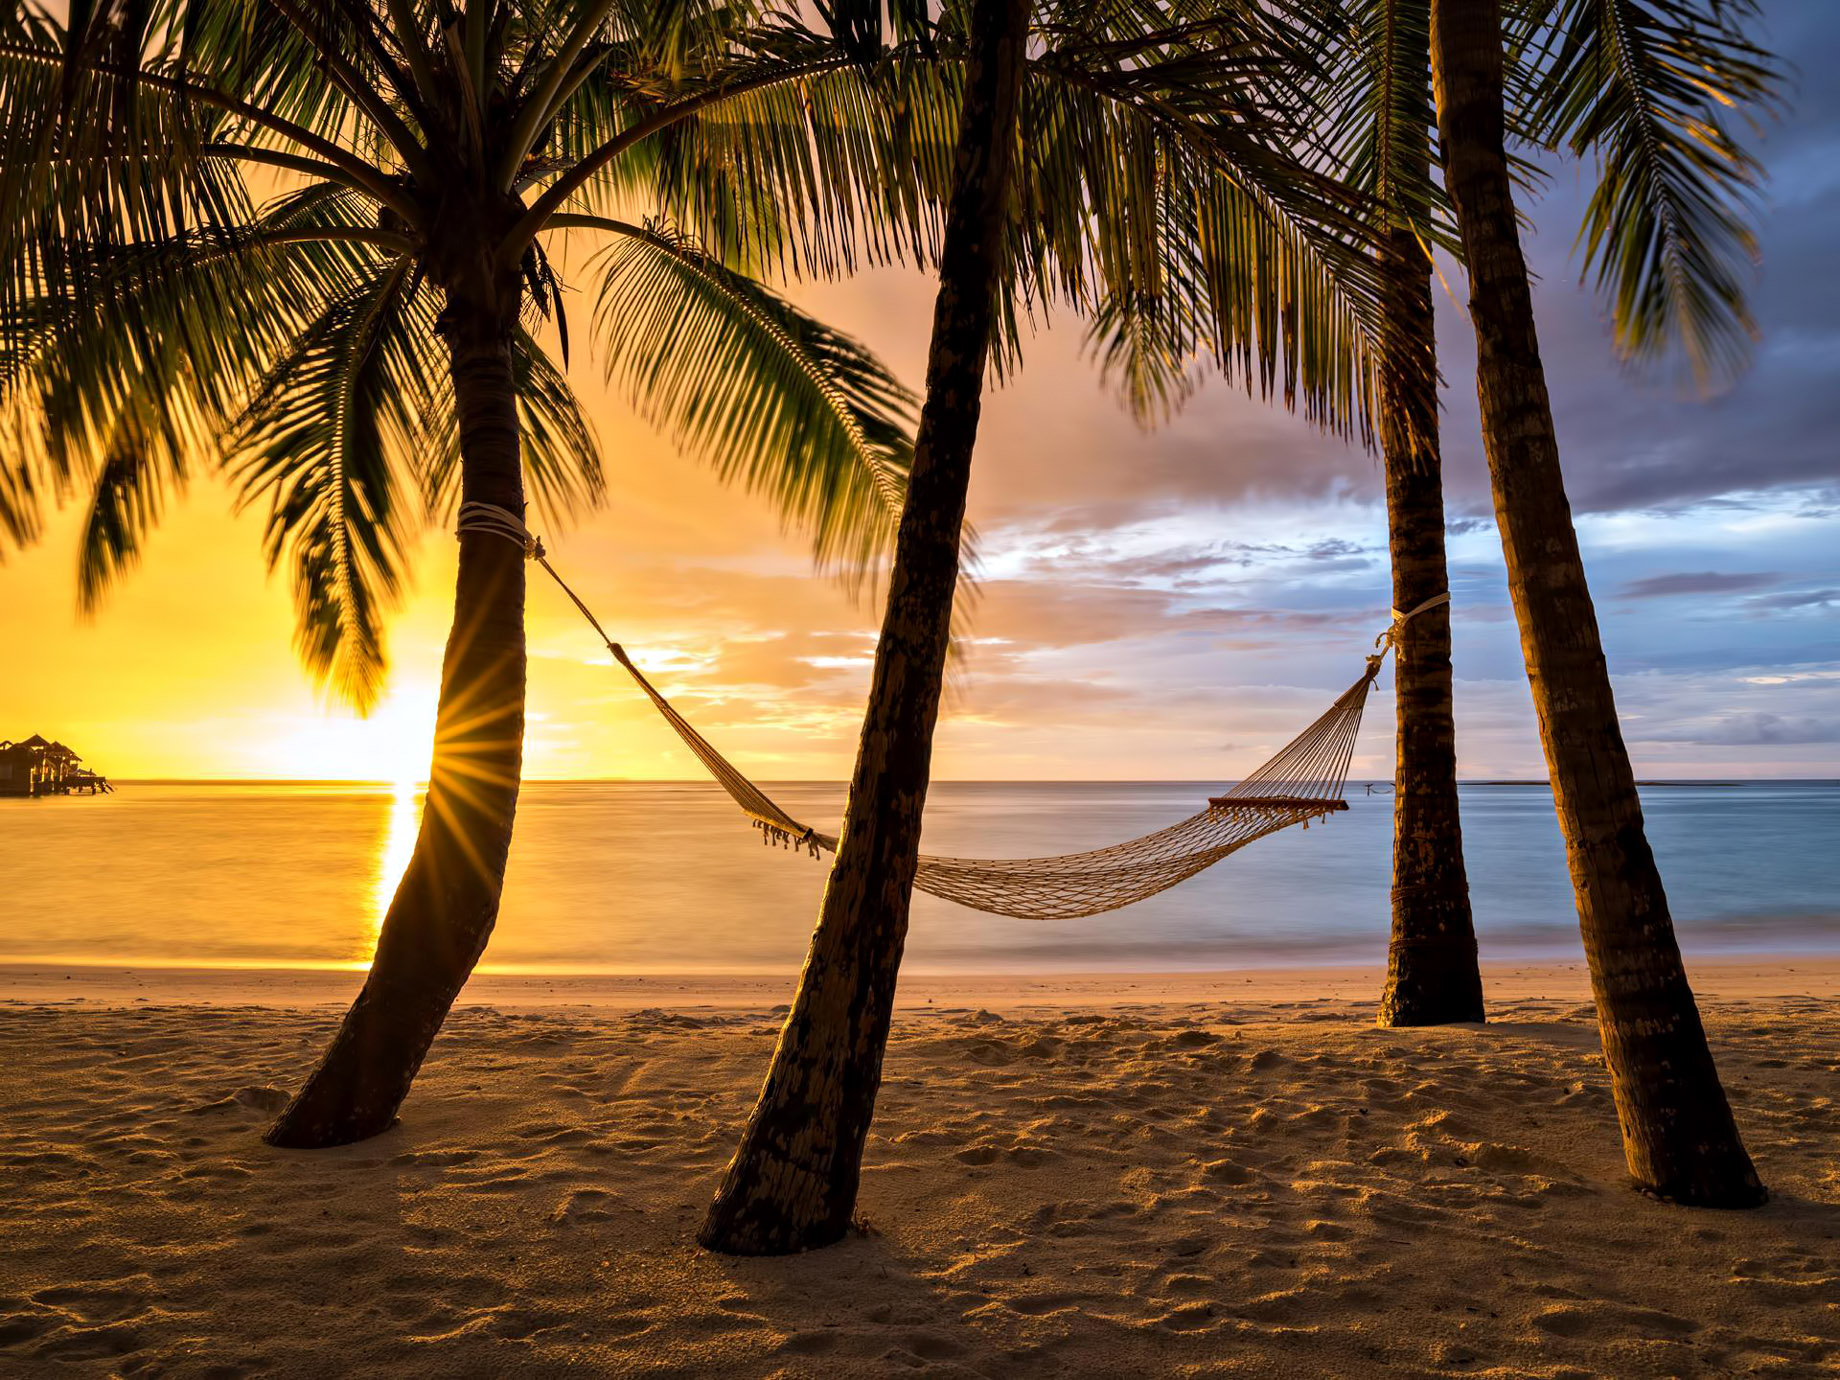 Gili Lankanfushi Resort - North Male Atoll, Maldives - Beach Palm Tree Hammock Sunset